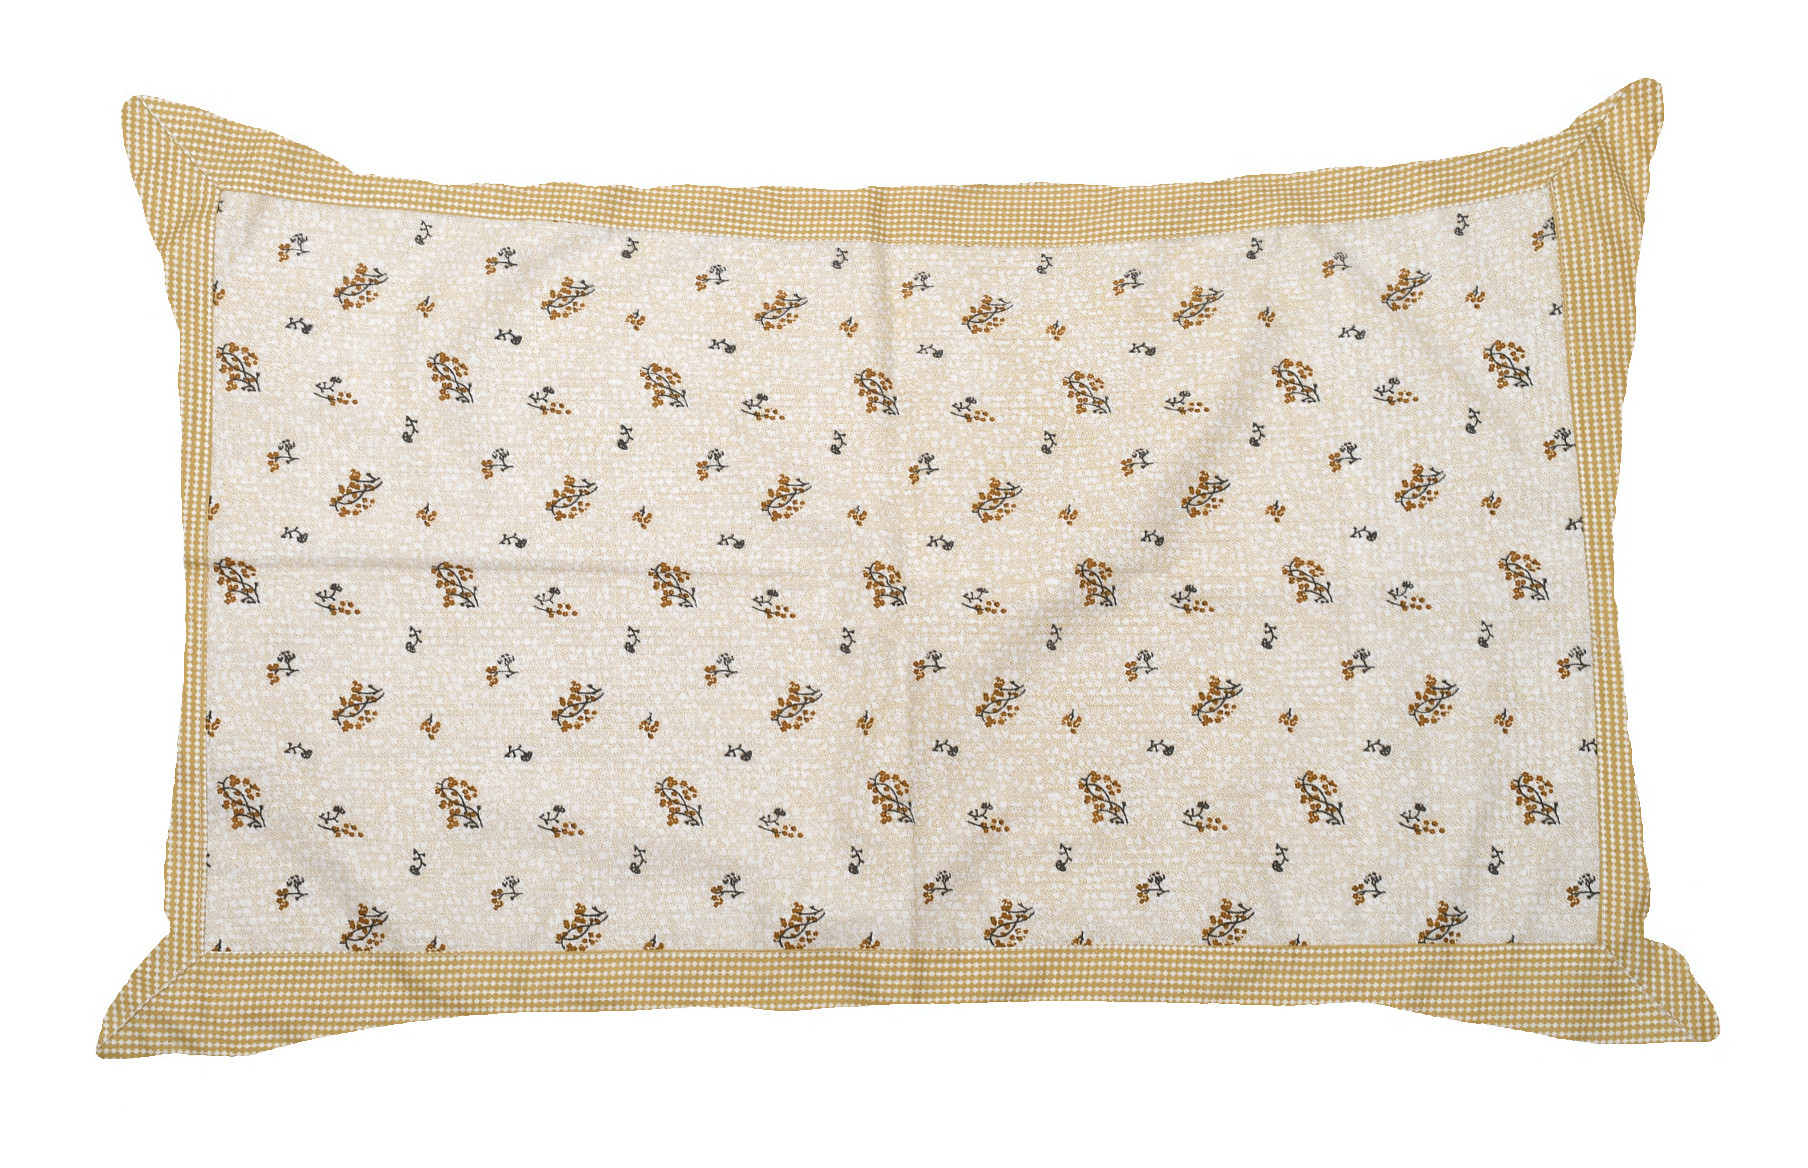 Kuber Industries Leaf Design Premium Cotton Pillow Covers, 18 x 28 inch,(Cream)